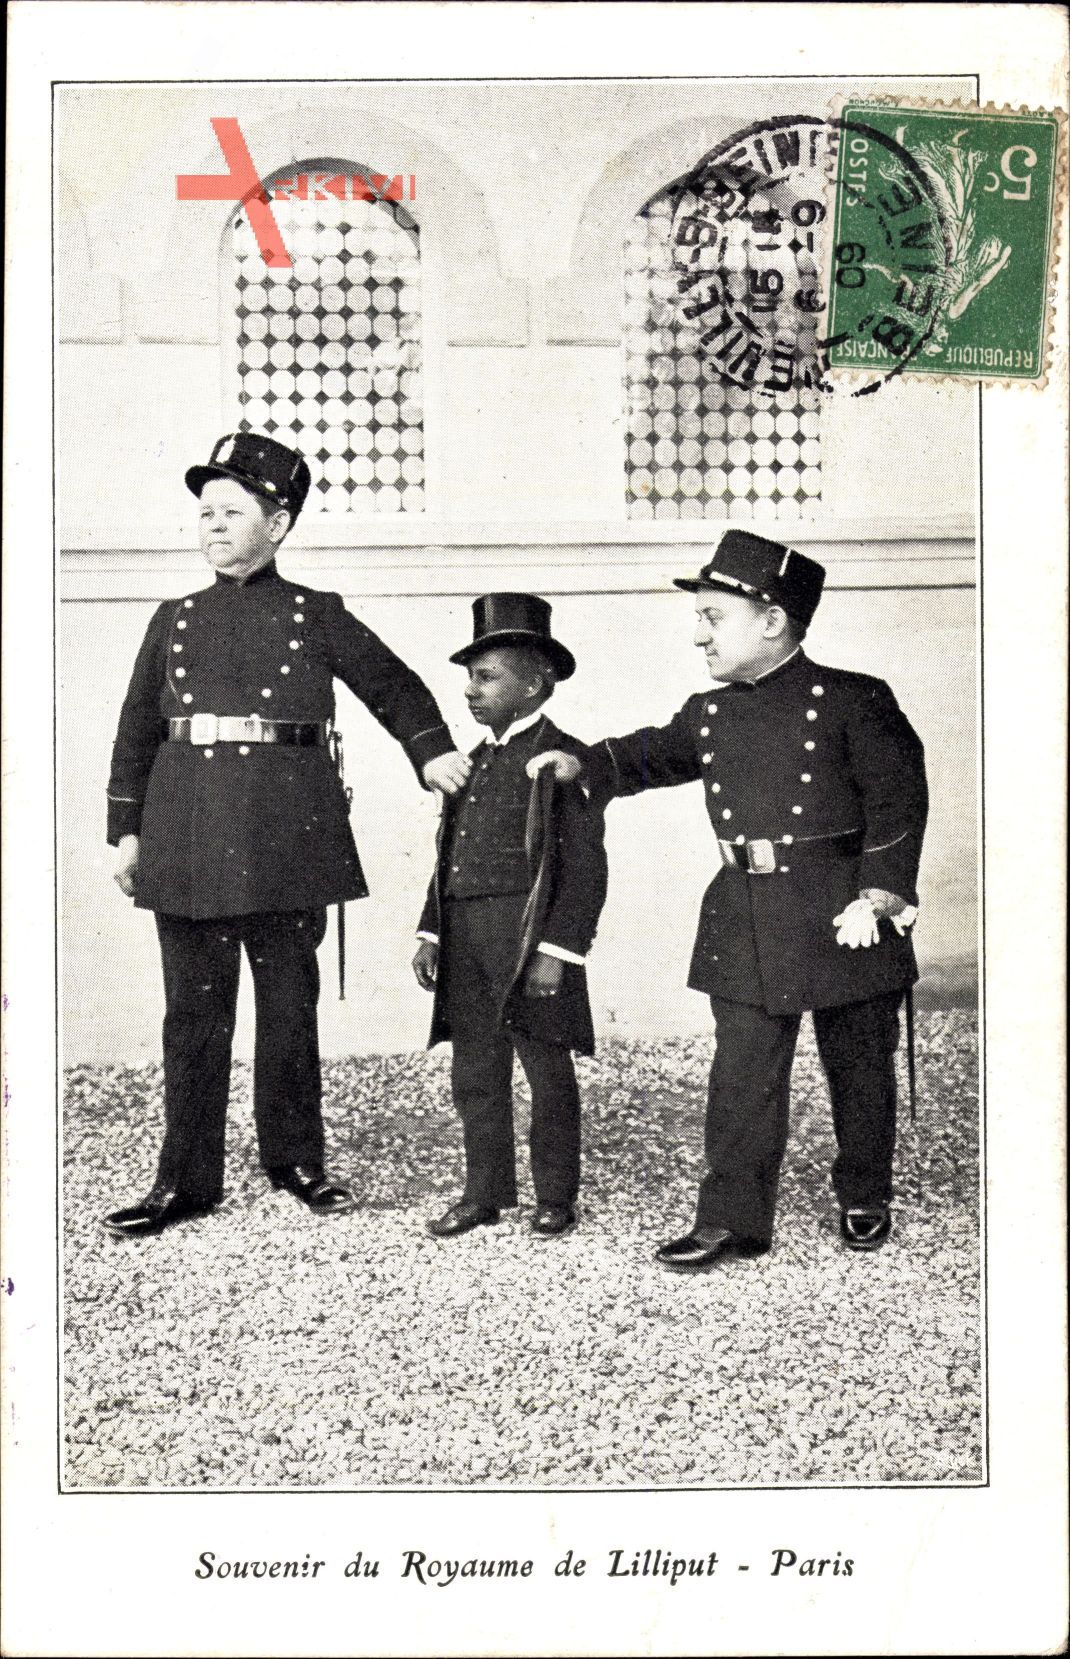 Paris, Souvenir du Royaume de Liliput, Liliputaner in Polizeiuniform